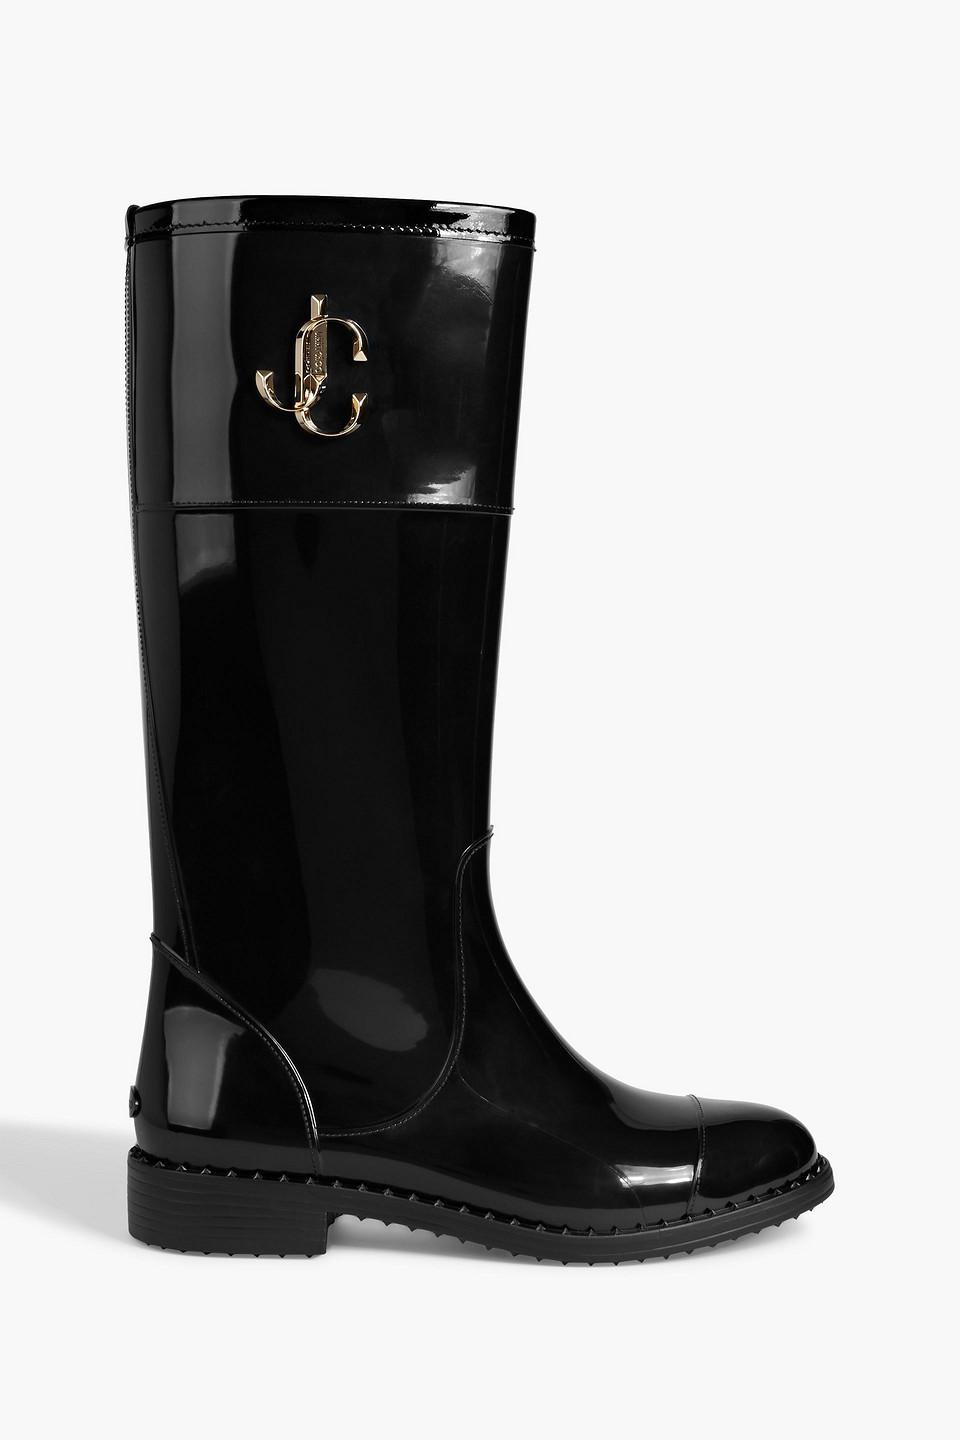 Jimmy Choo Edith Rubber Rain Boots in Black | Lyst